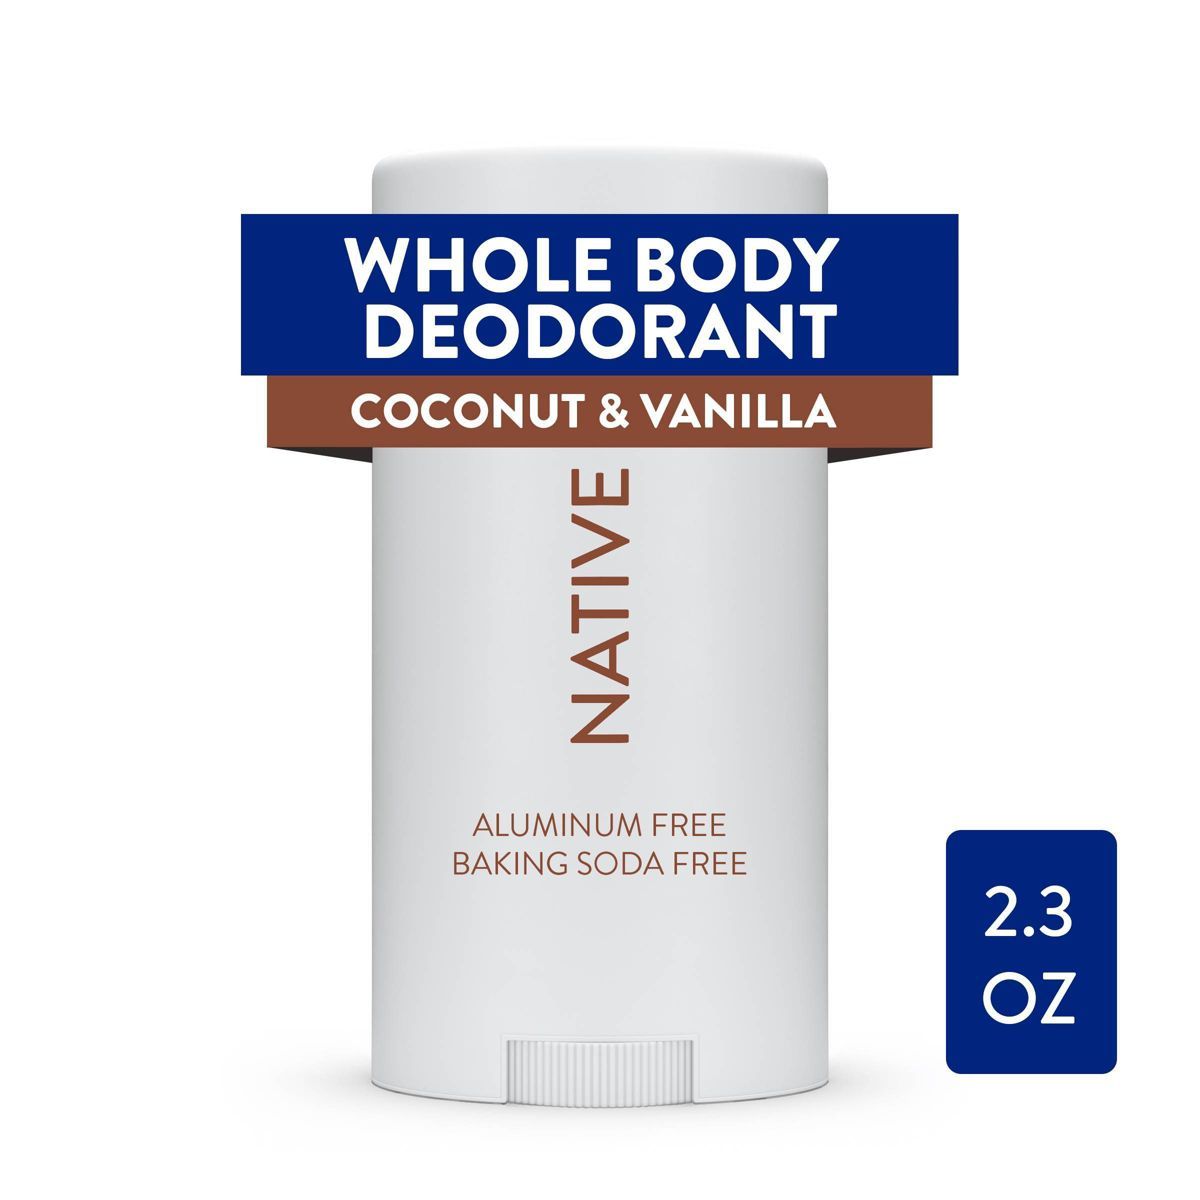 Native Whole Body Deodorant Stick - Coconut & Vanilla - Aluminum Free - 2.3oz | Target